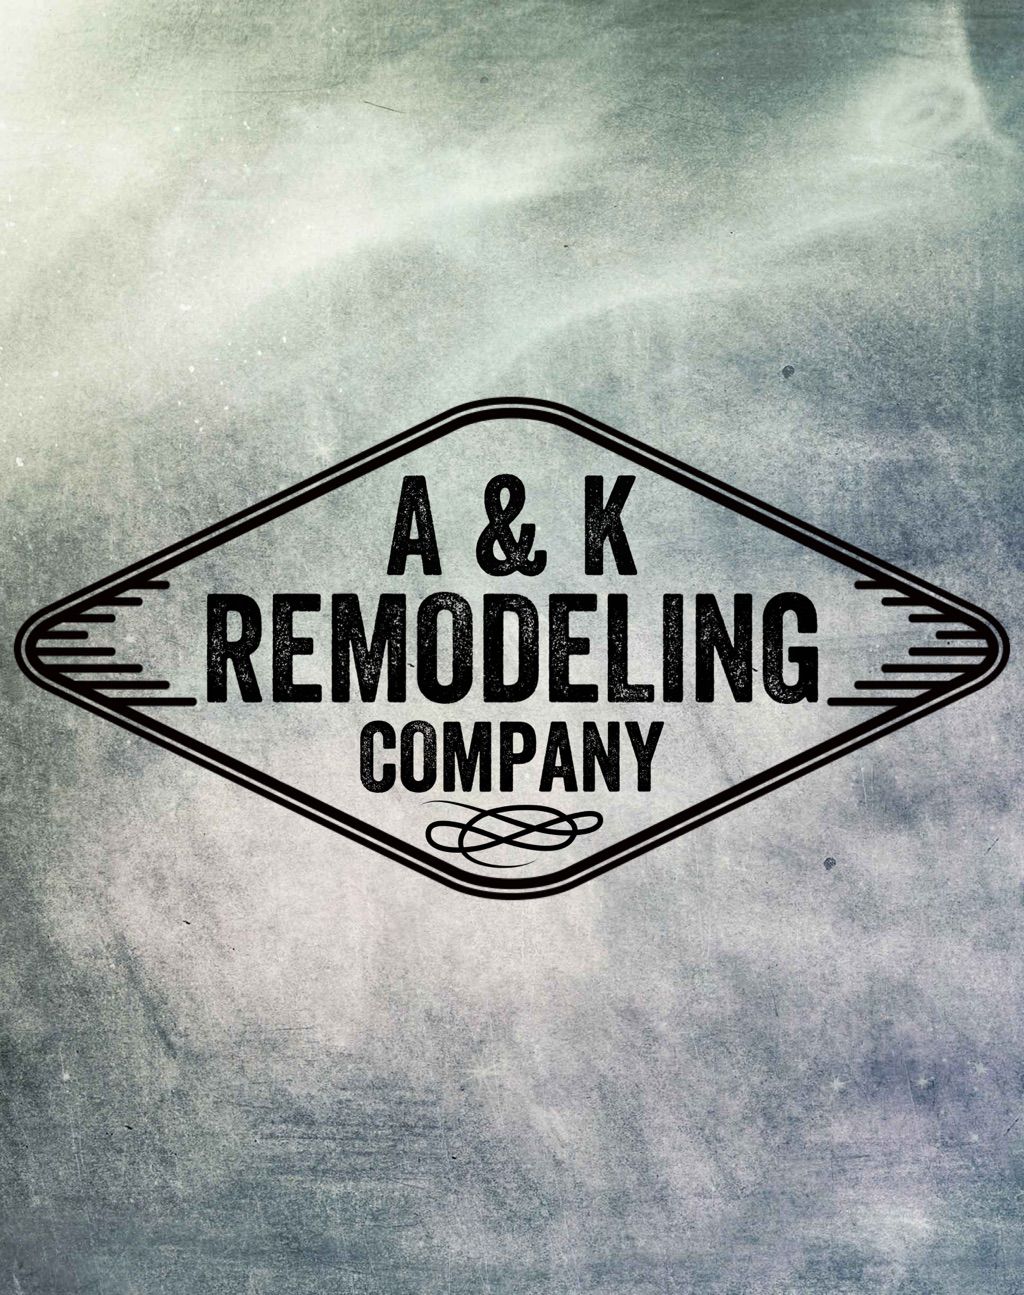 A & K Remodeling Company